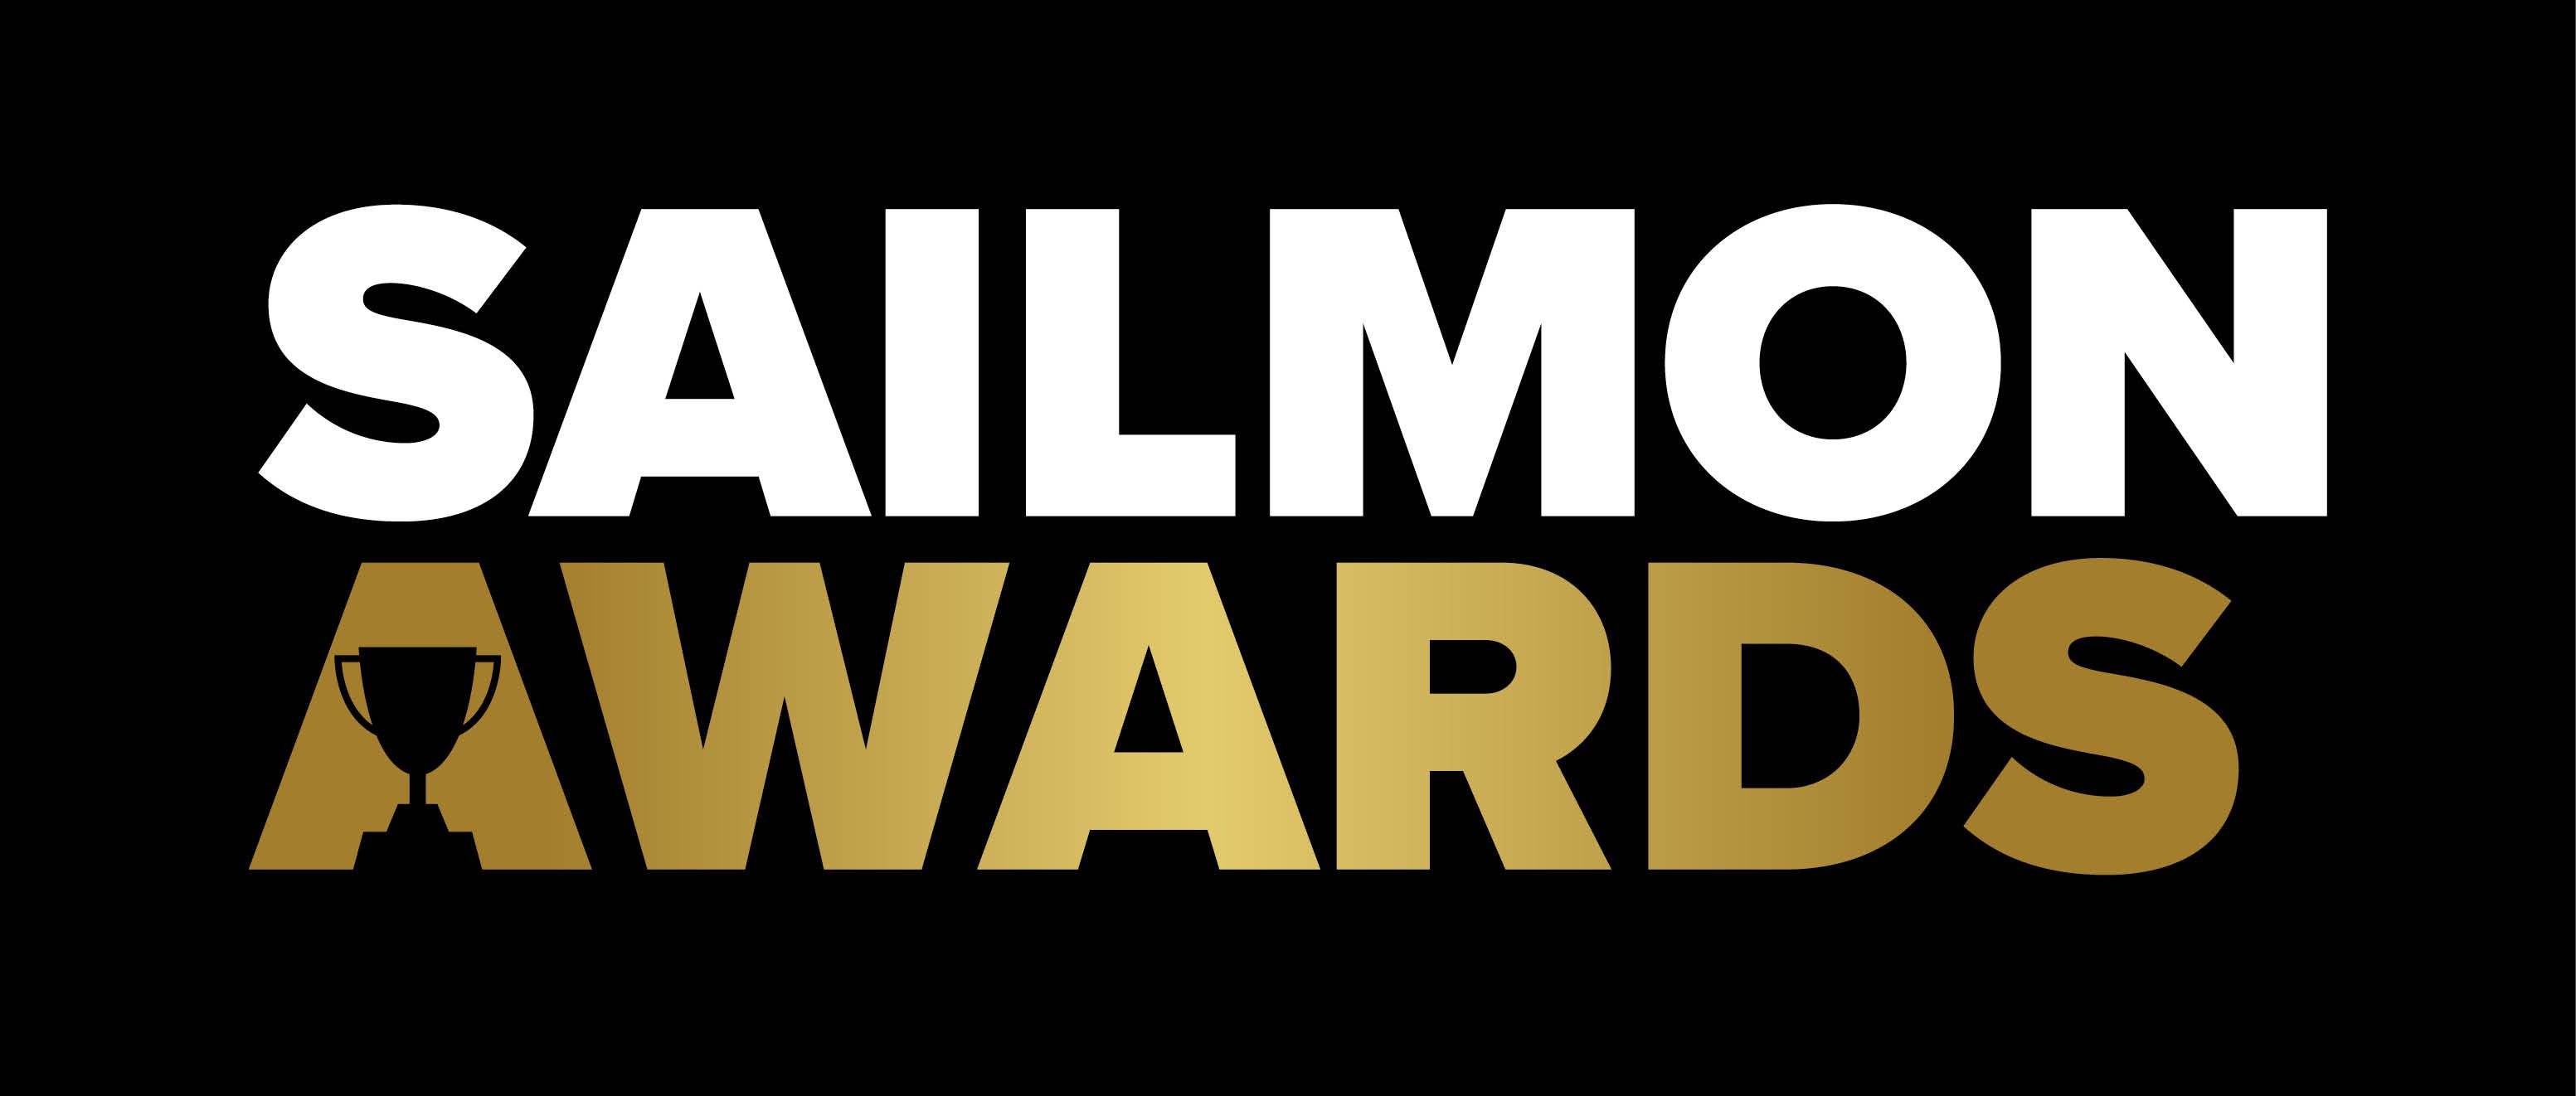 The Sailmon Awards - FEBRUARY